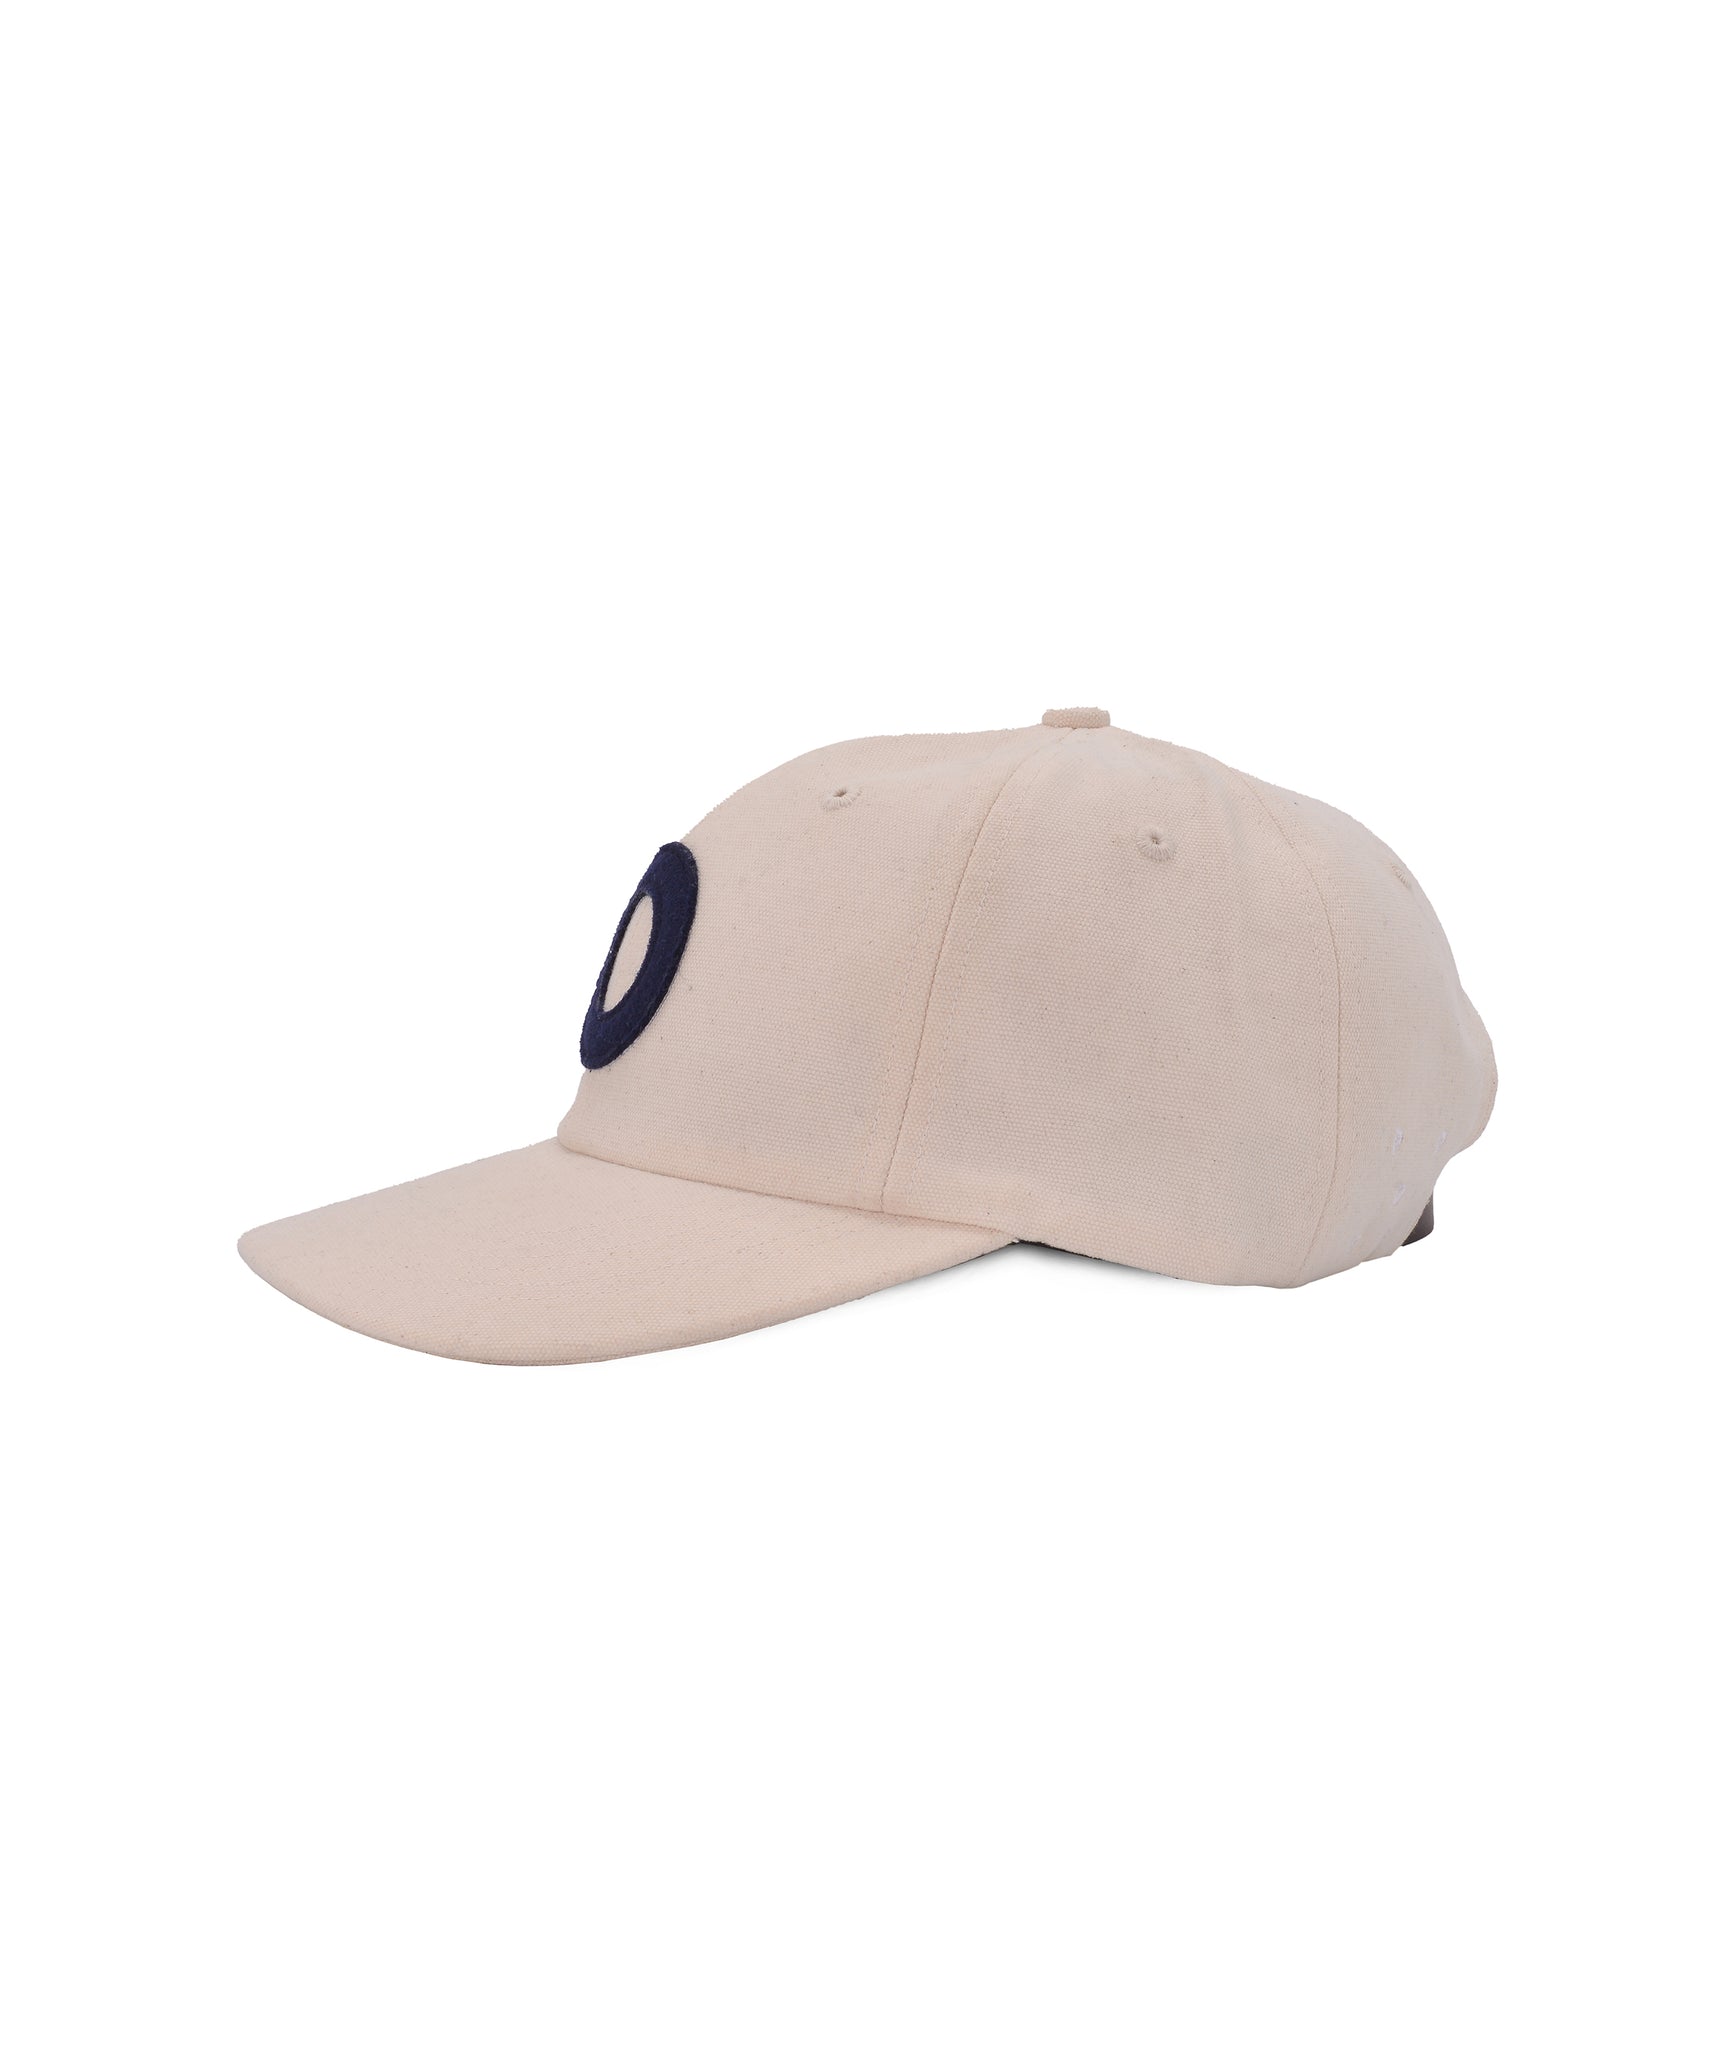 O Sixpanel Hat - Off-White/Navy